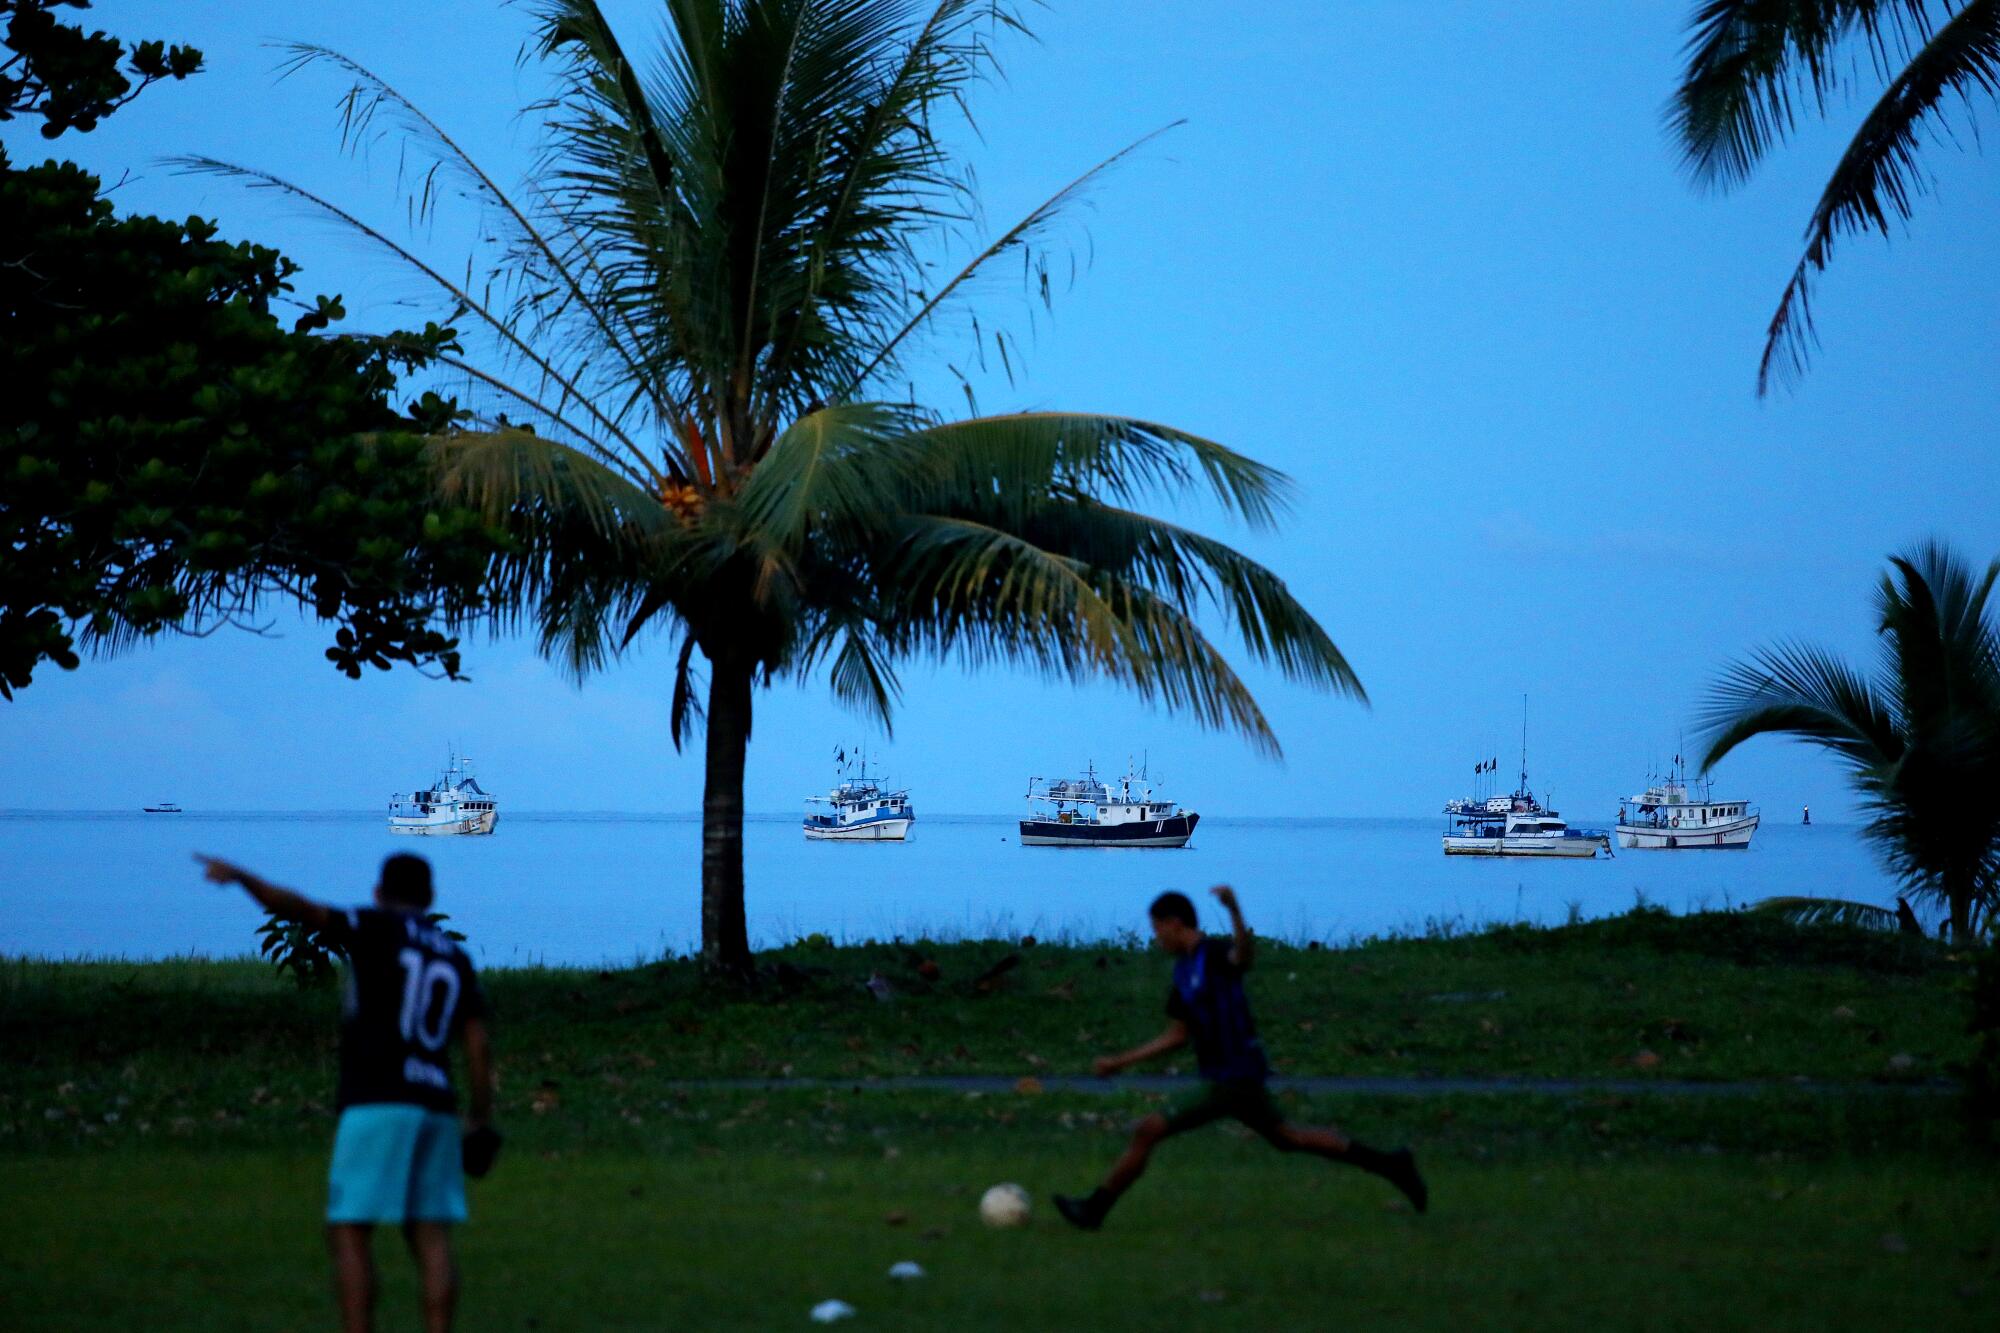 Soccer practice is held at a park alongside the beach near an entry point along the Rio Cieneguita